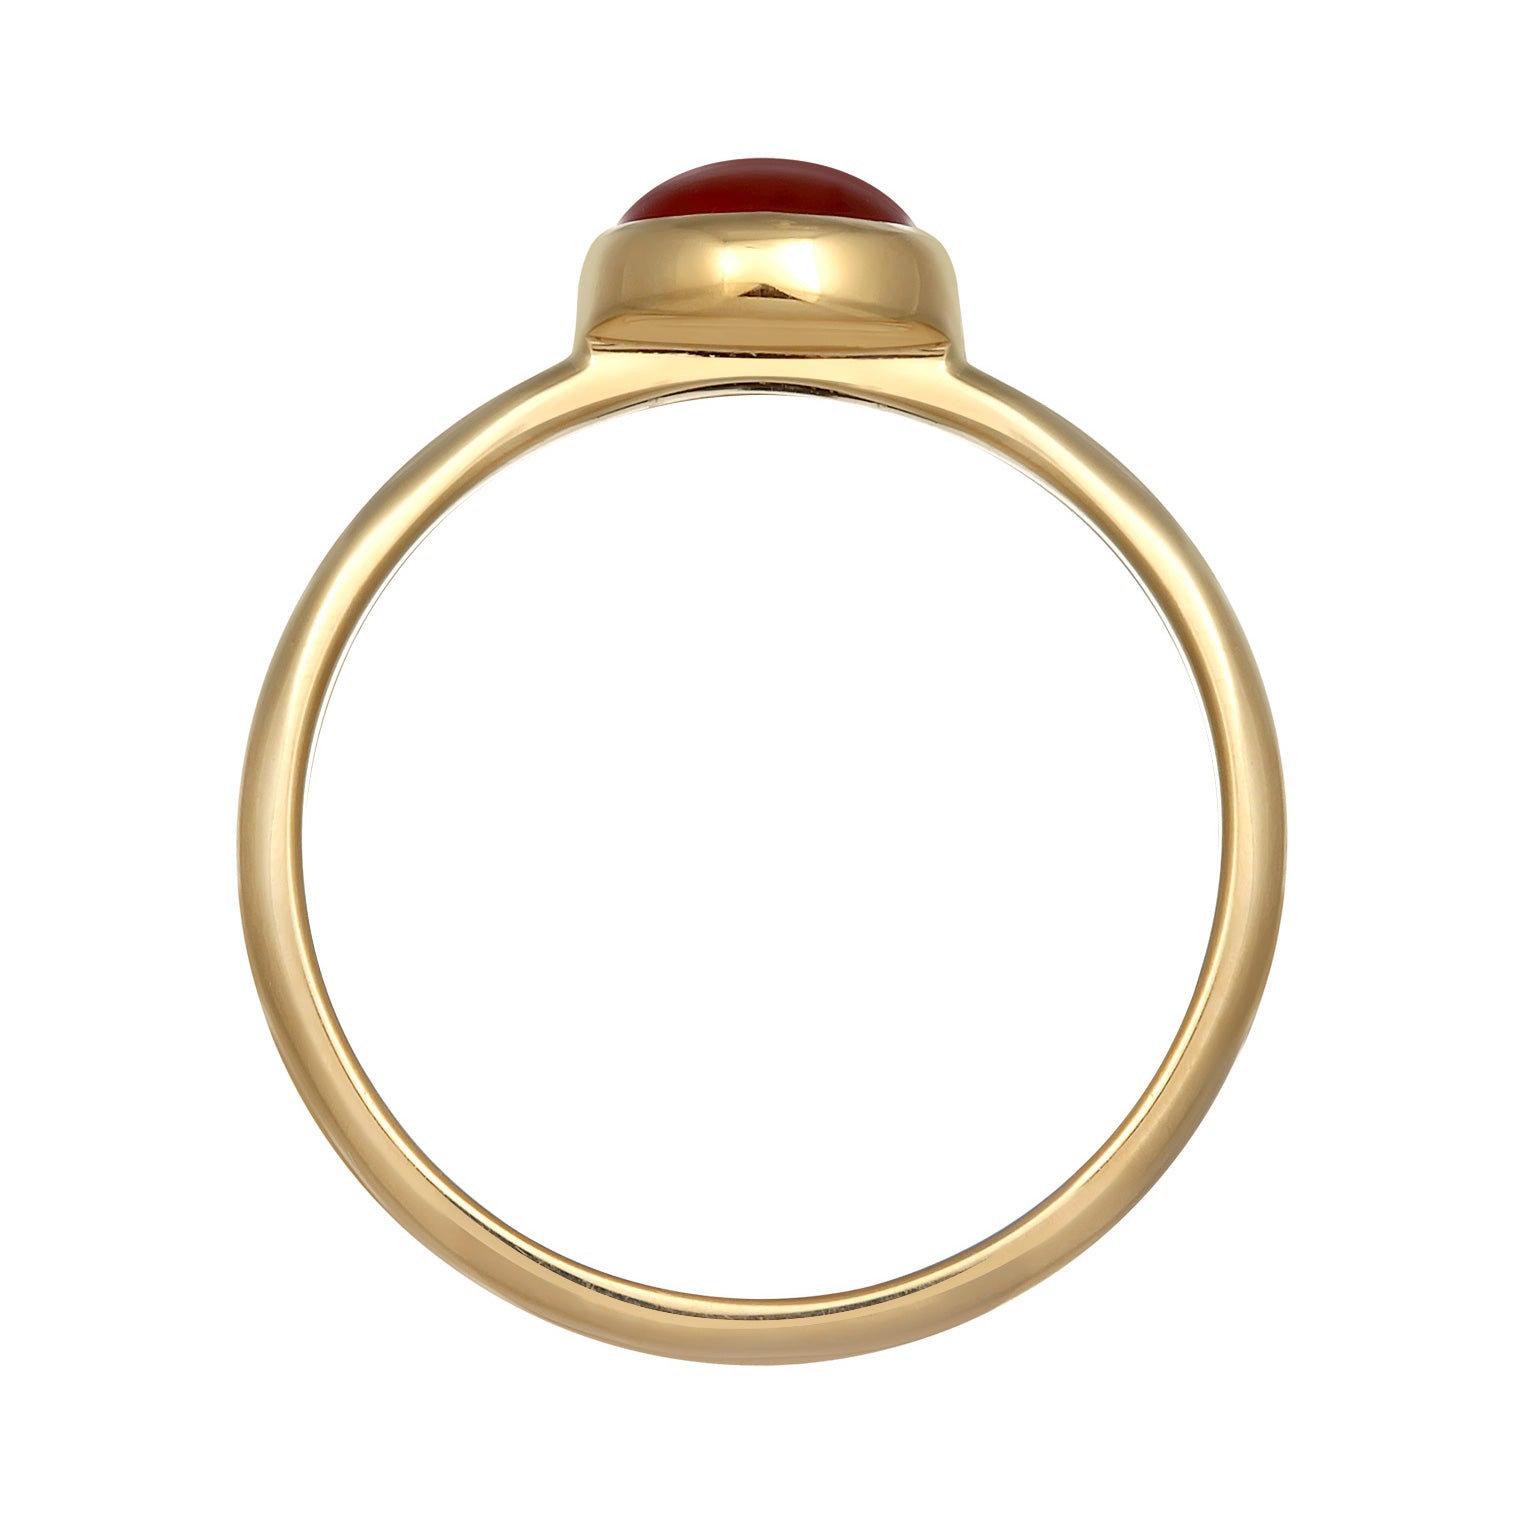 Gold - Elli PREMIUM | Solitär-ring | Karneol (Rot) | 925er Sterling Silber Vergoldet